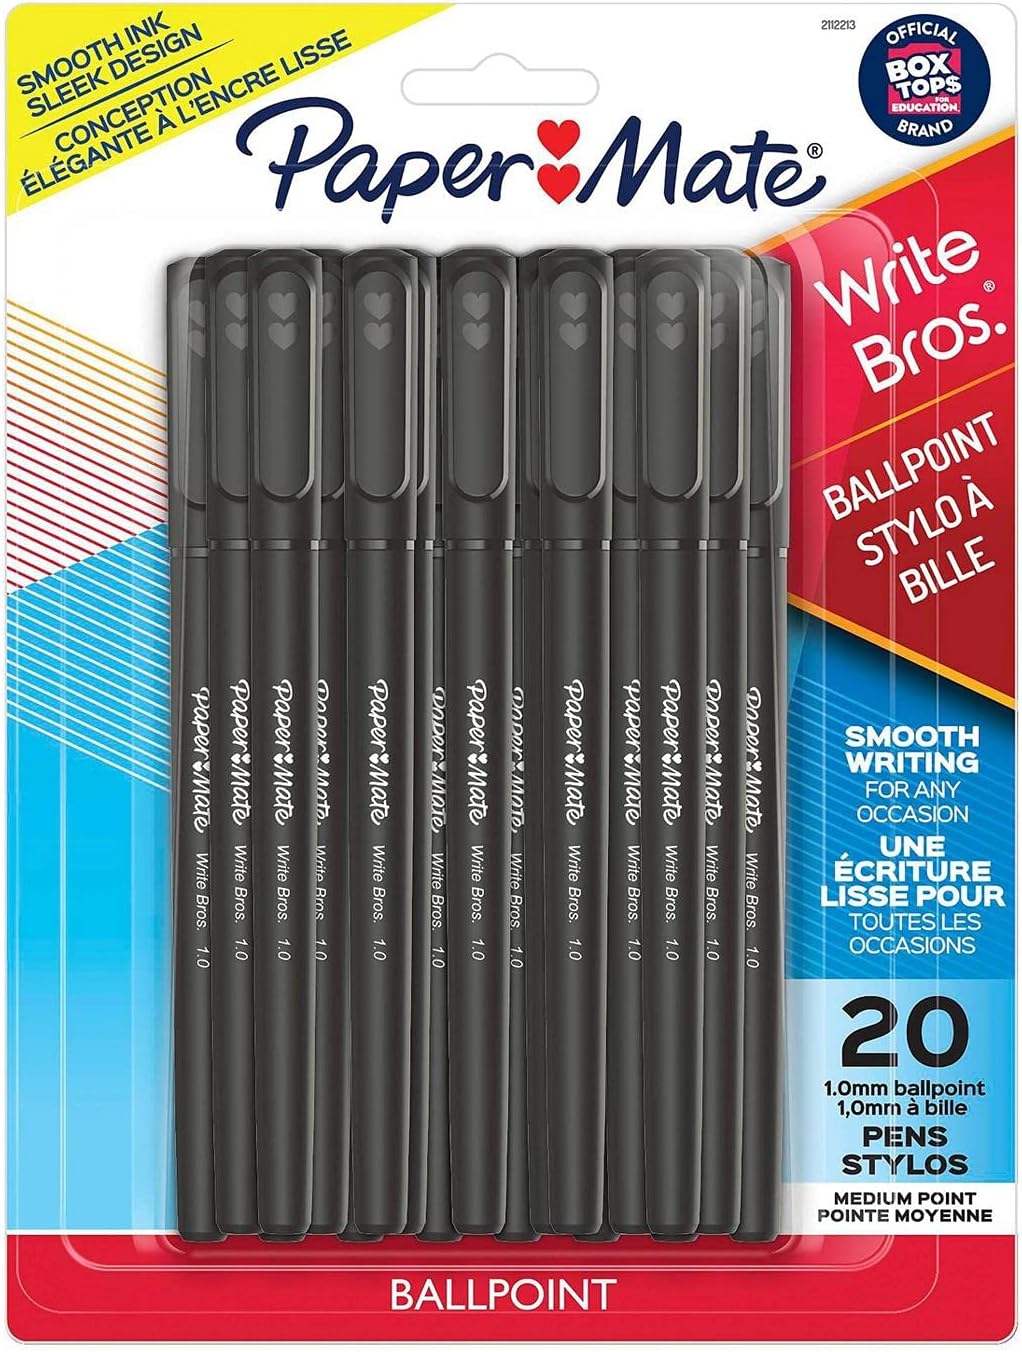 Paper Mate 20pk Ballpoint Pens Capped Write Bros 1.0mm Black